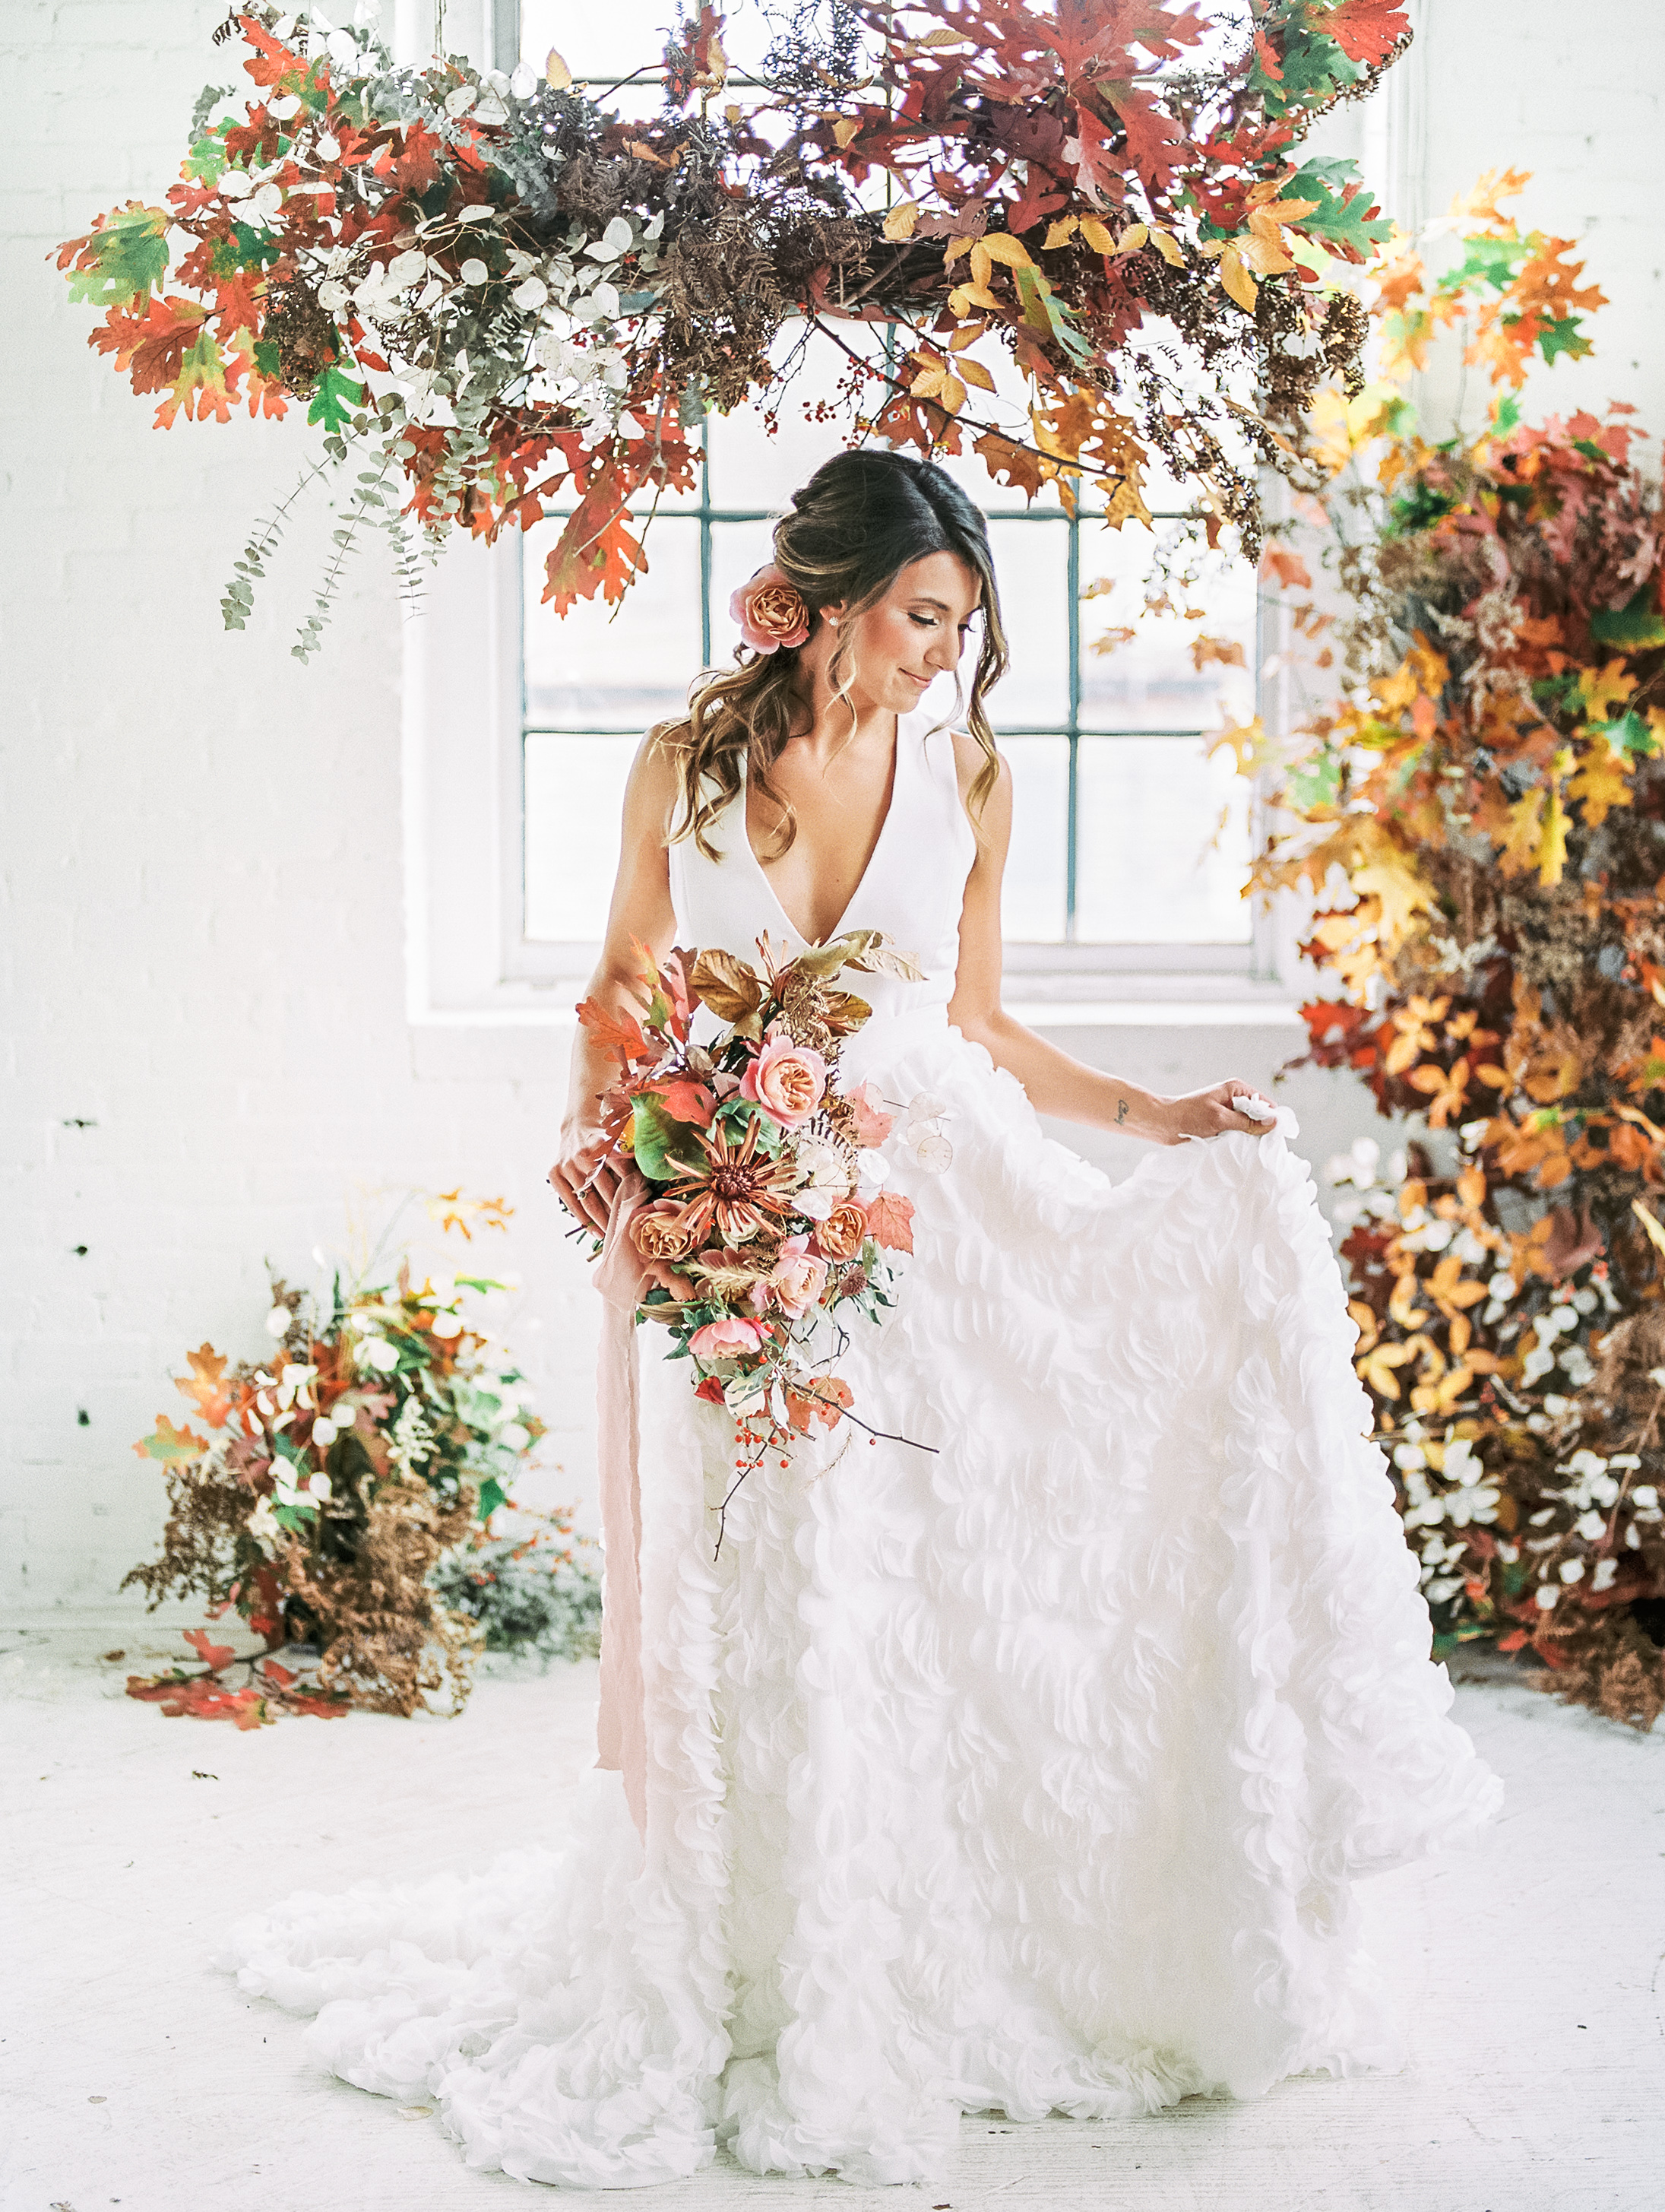 Autumn Wedding | The Day's Design | Samantha James Phtoography